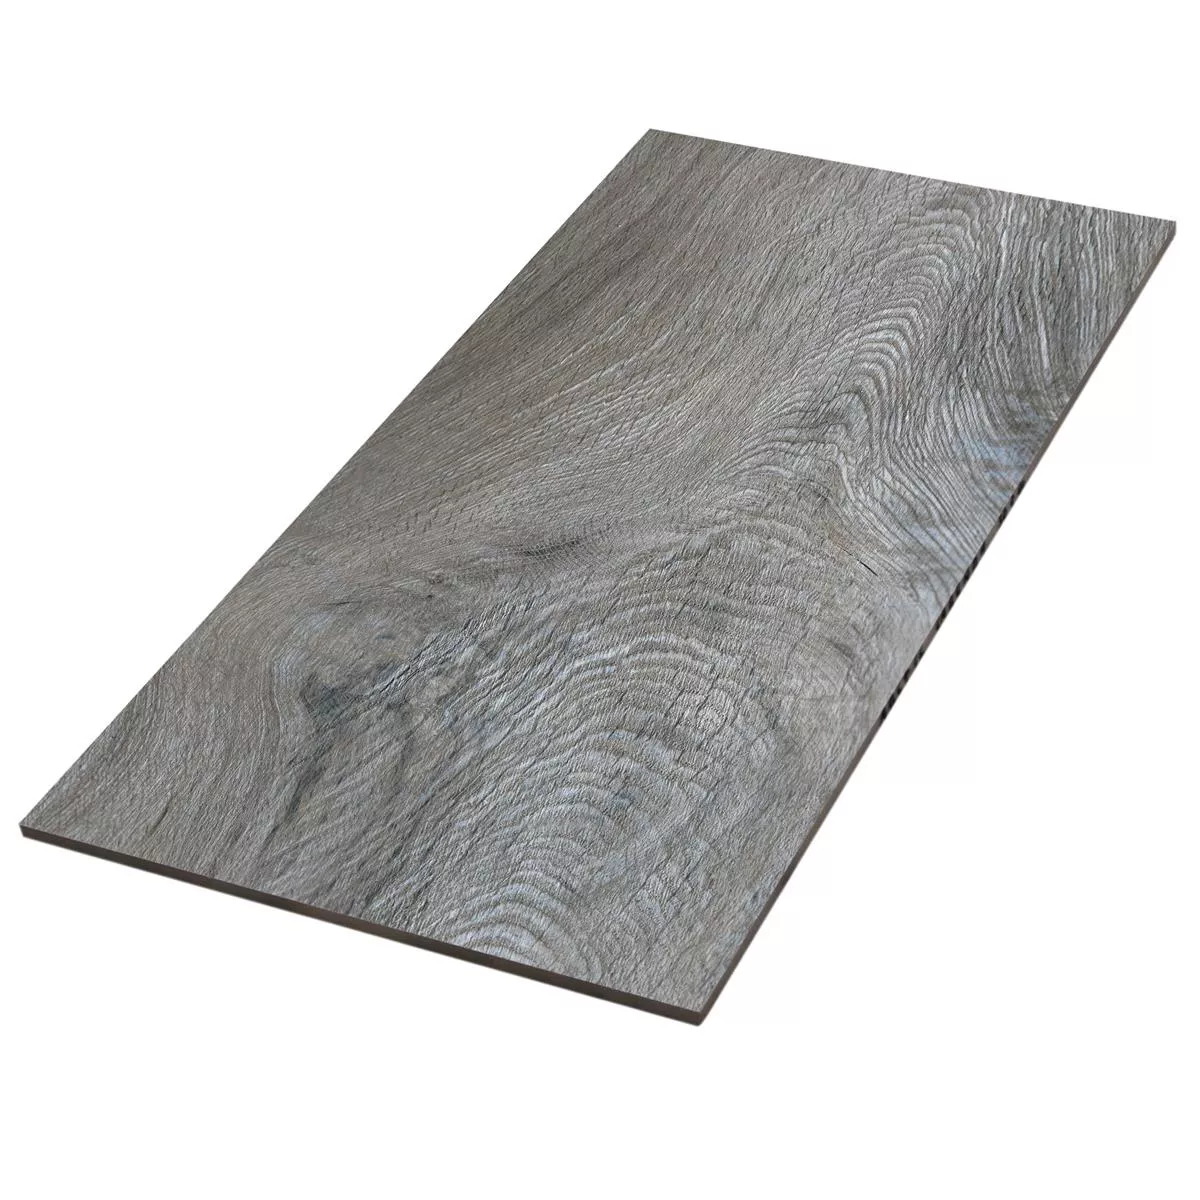 Floor Tiles Goranboy Wood Optic Ash 30x60cm / R10